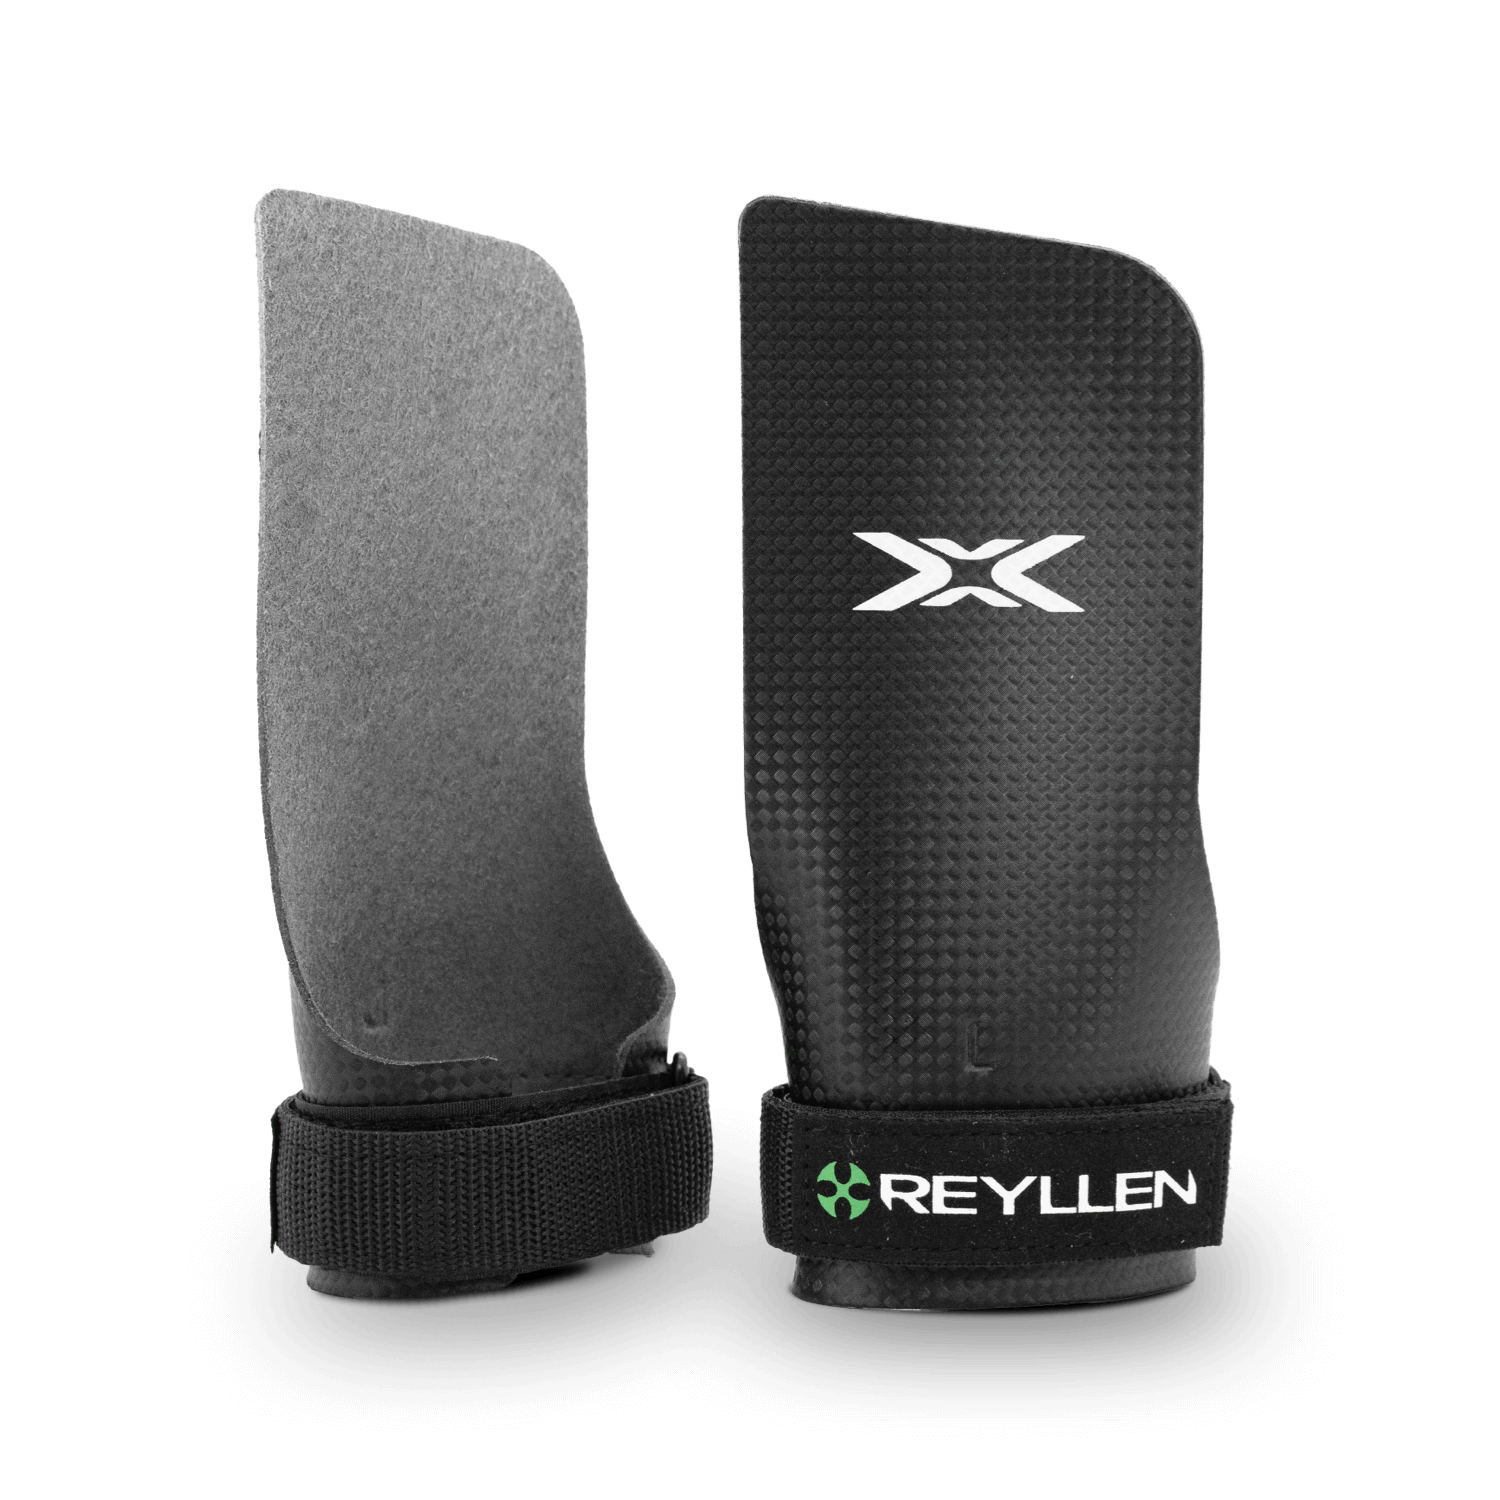 Reyllen Gecko Carbon X2 Fingerless CrossFit Gymnastic Hand Grips - Feature PNG image